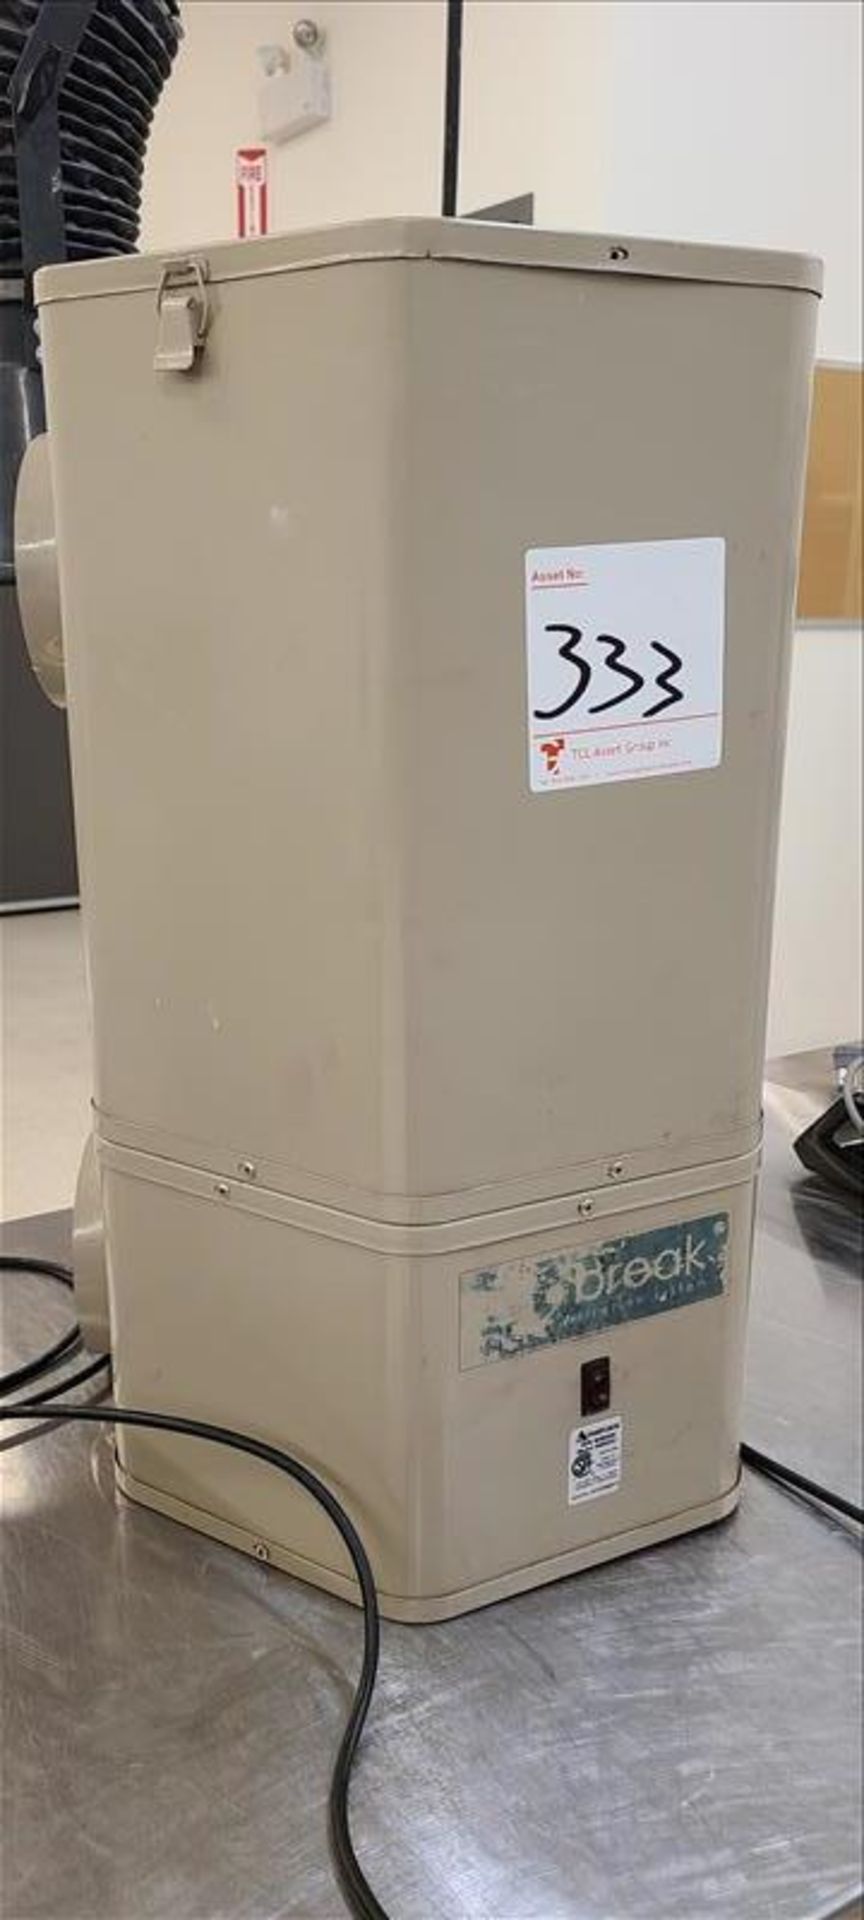 Amaircare Air Break Filtration System, model 4000hv, s/n.4312G00011.